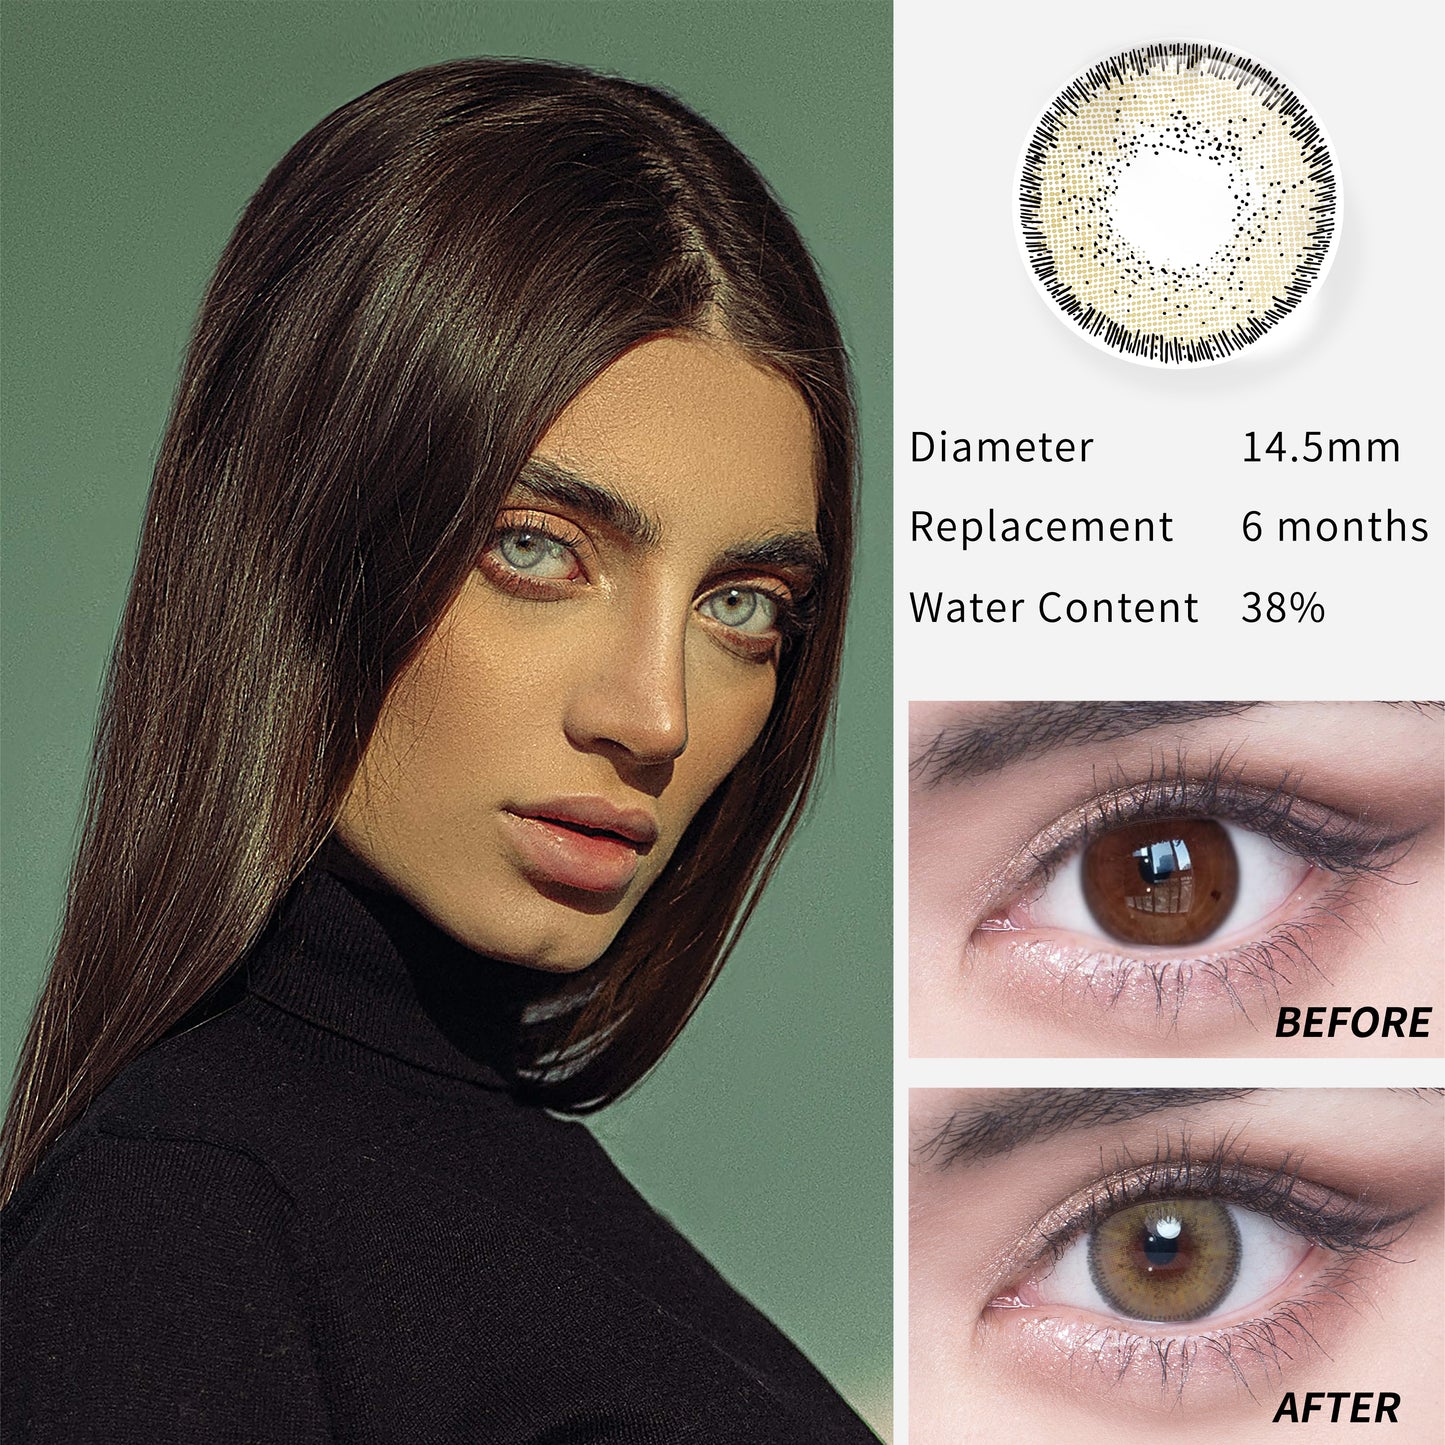 1Pcs FDA Certificate Eyes Colorful Contact Lenses - Wonderland brown